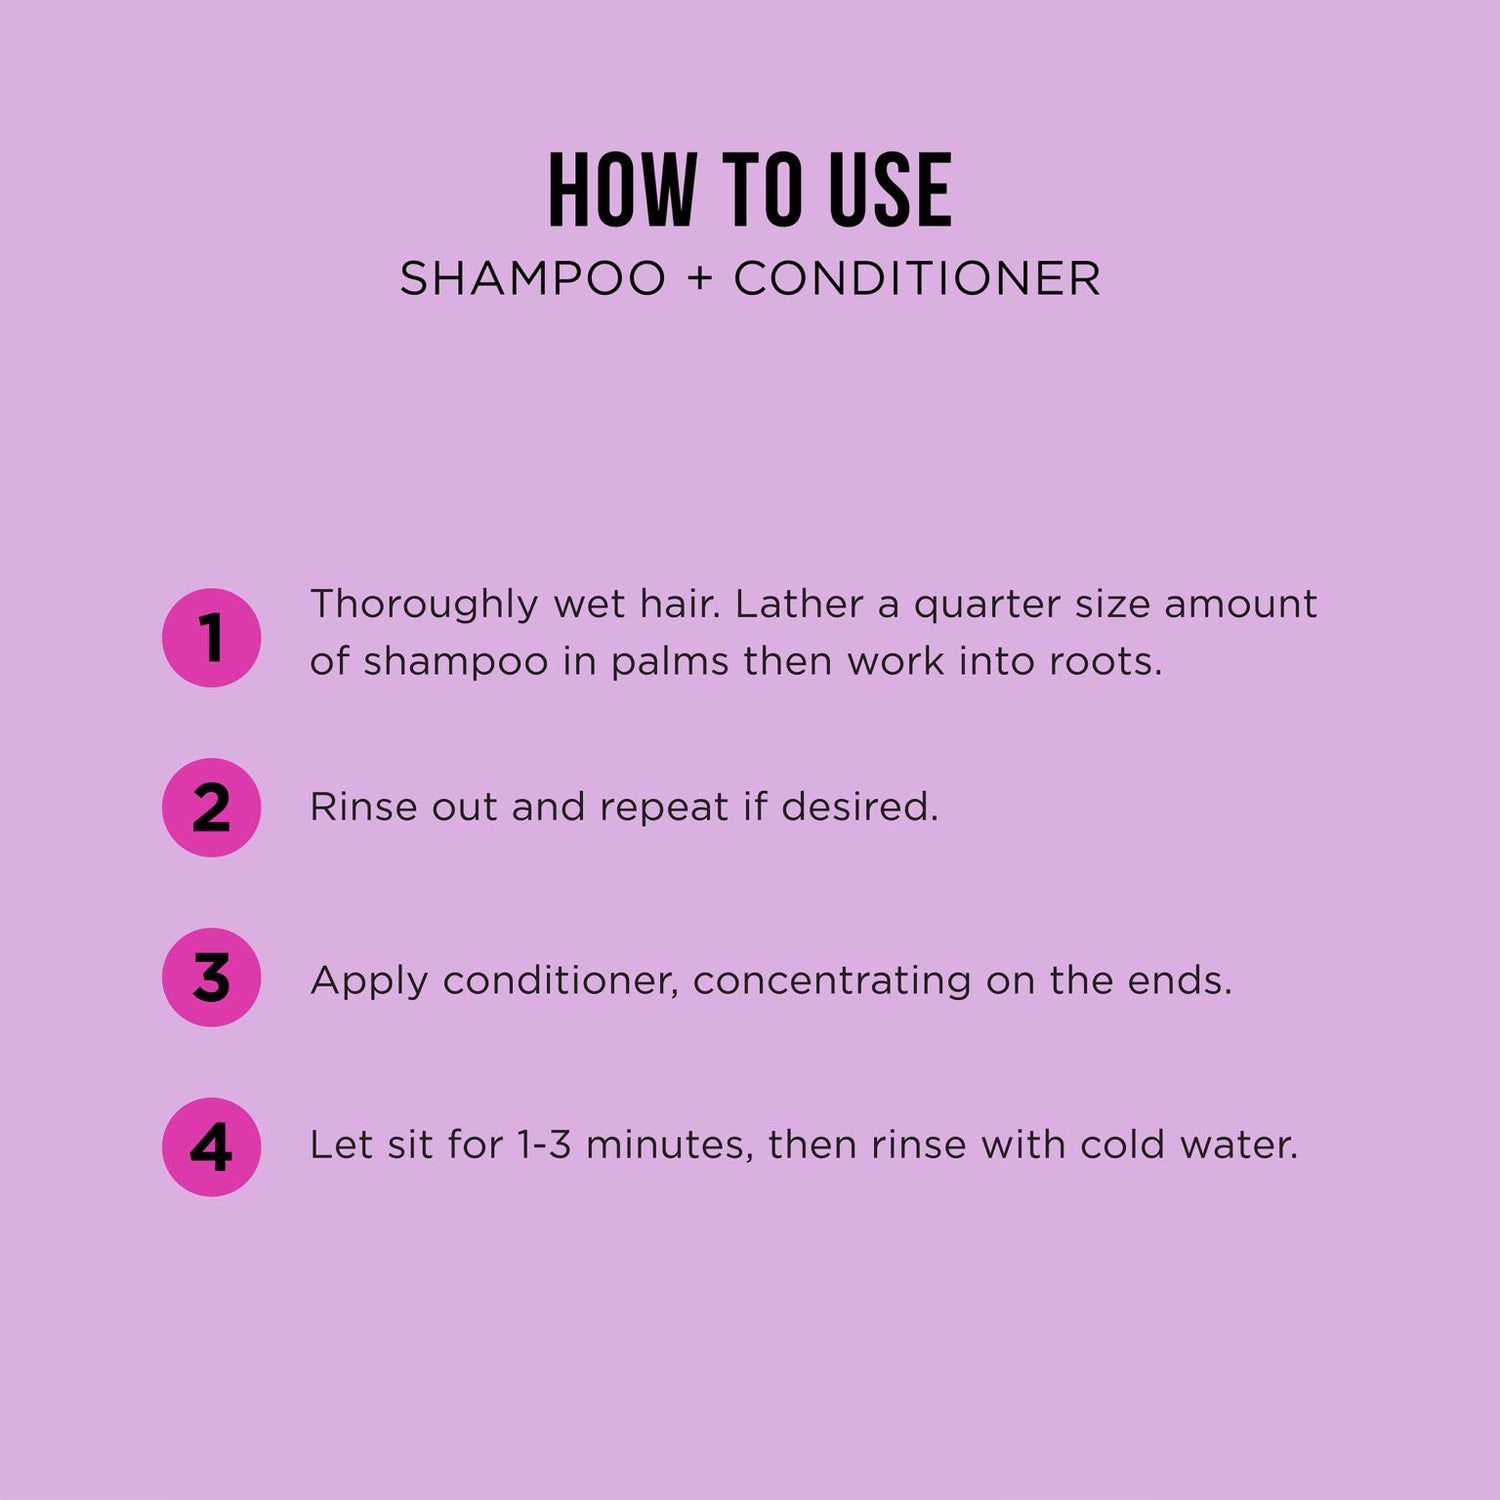 HASK Curl Care Moisturizing Shampoo